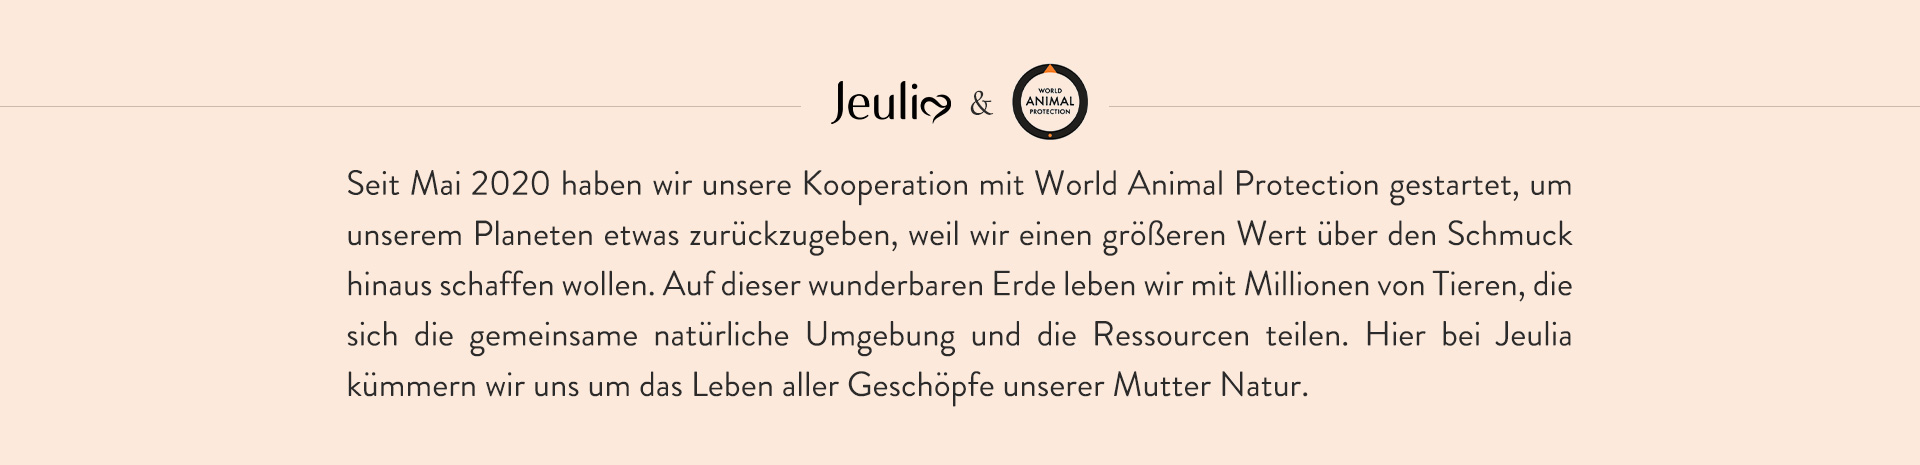 Jeulia's Partnership with World Animal Protection